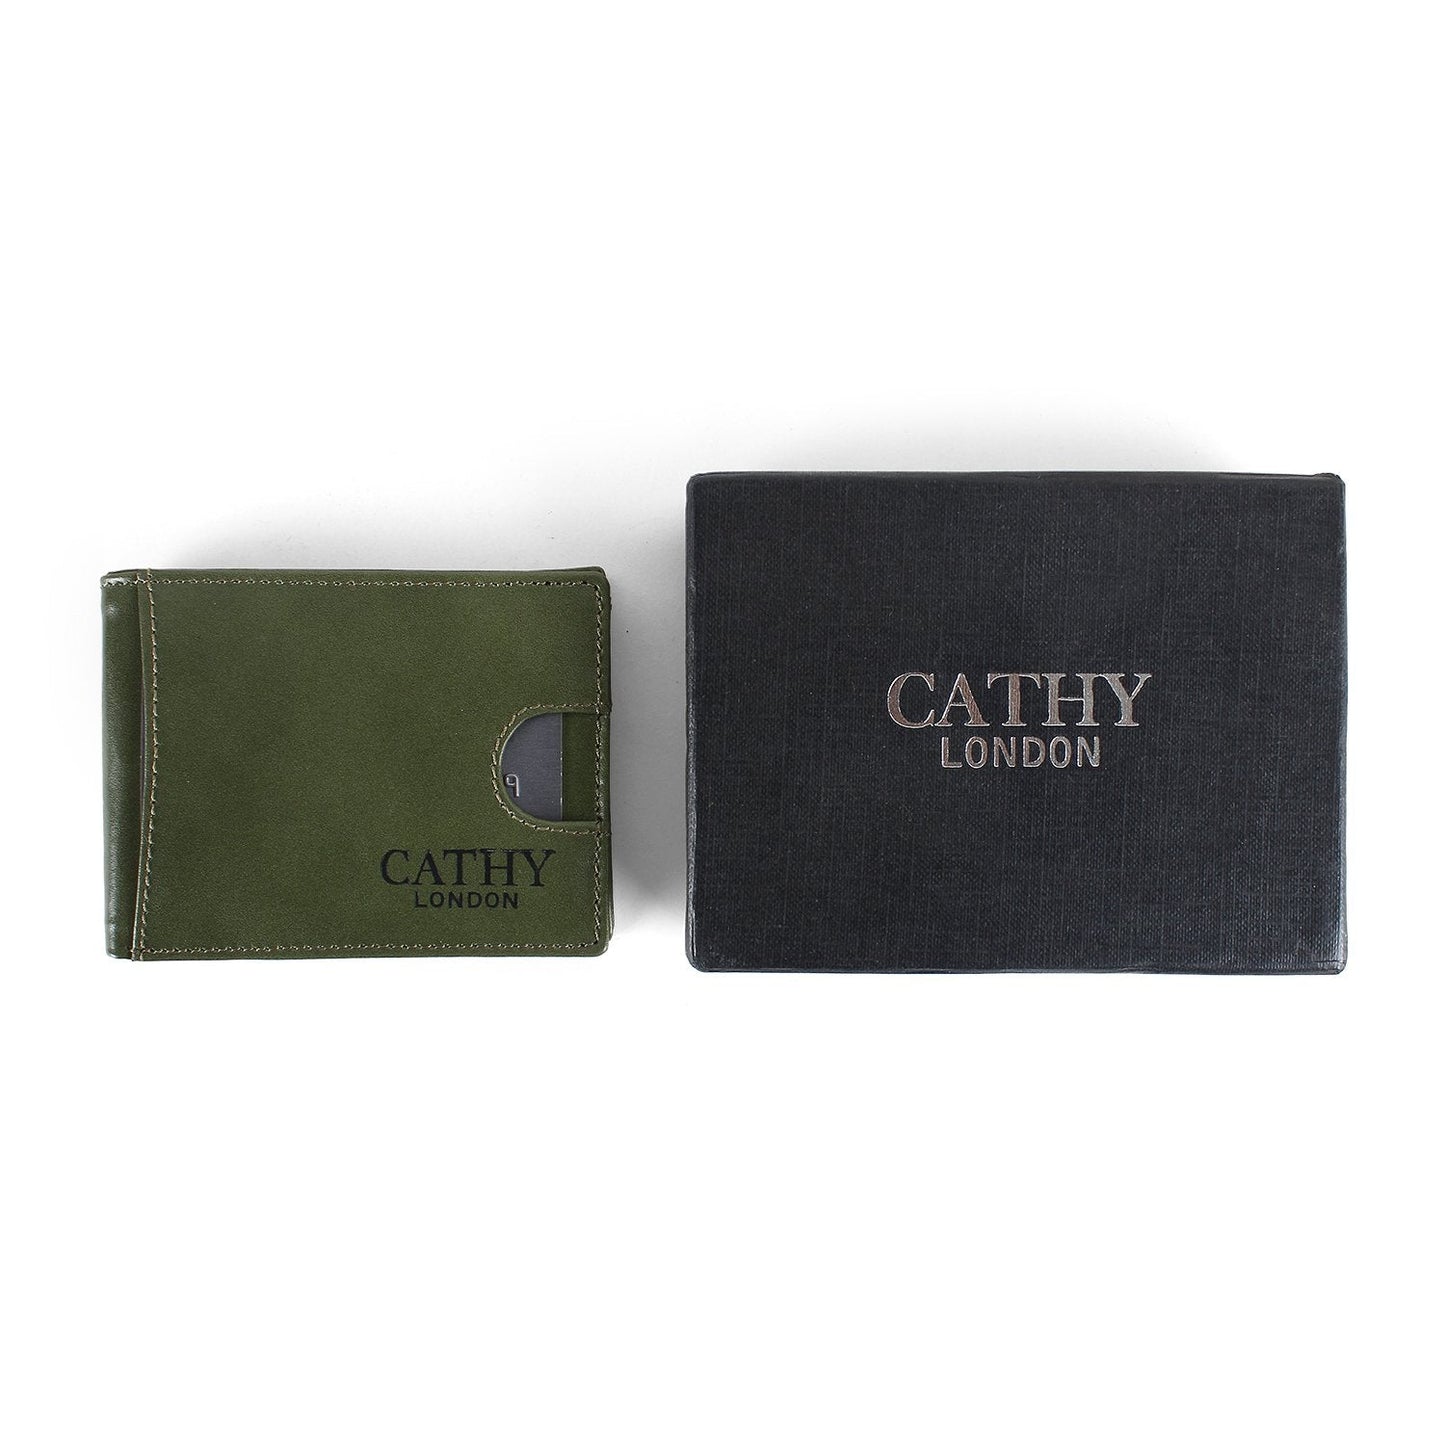 Olive Colour Bi-Fold Italian Leather Money Clip Card Holder/Slim Wallet (6 Cards + 1 ID Slot + Cash Compartment )